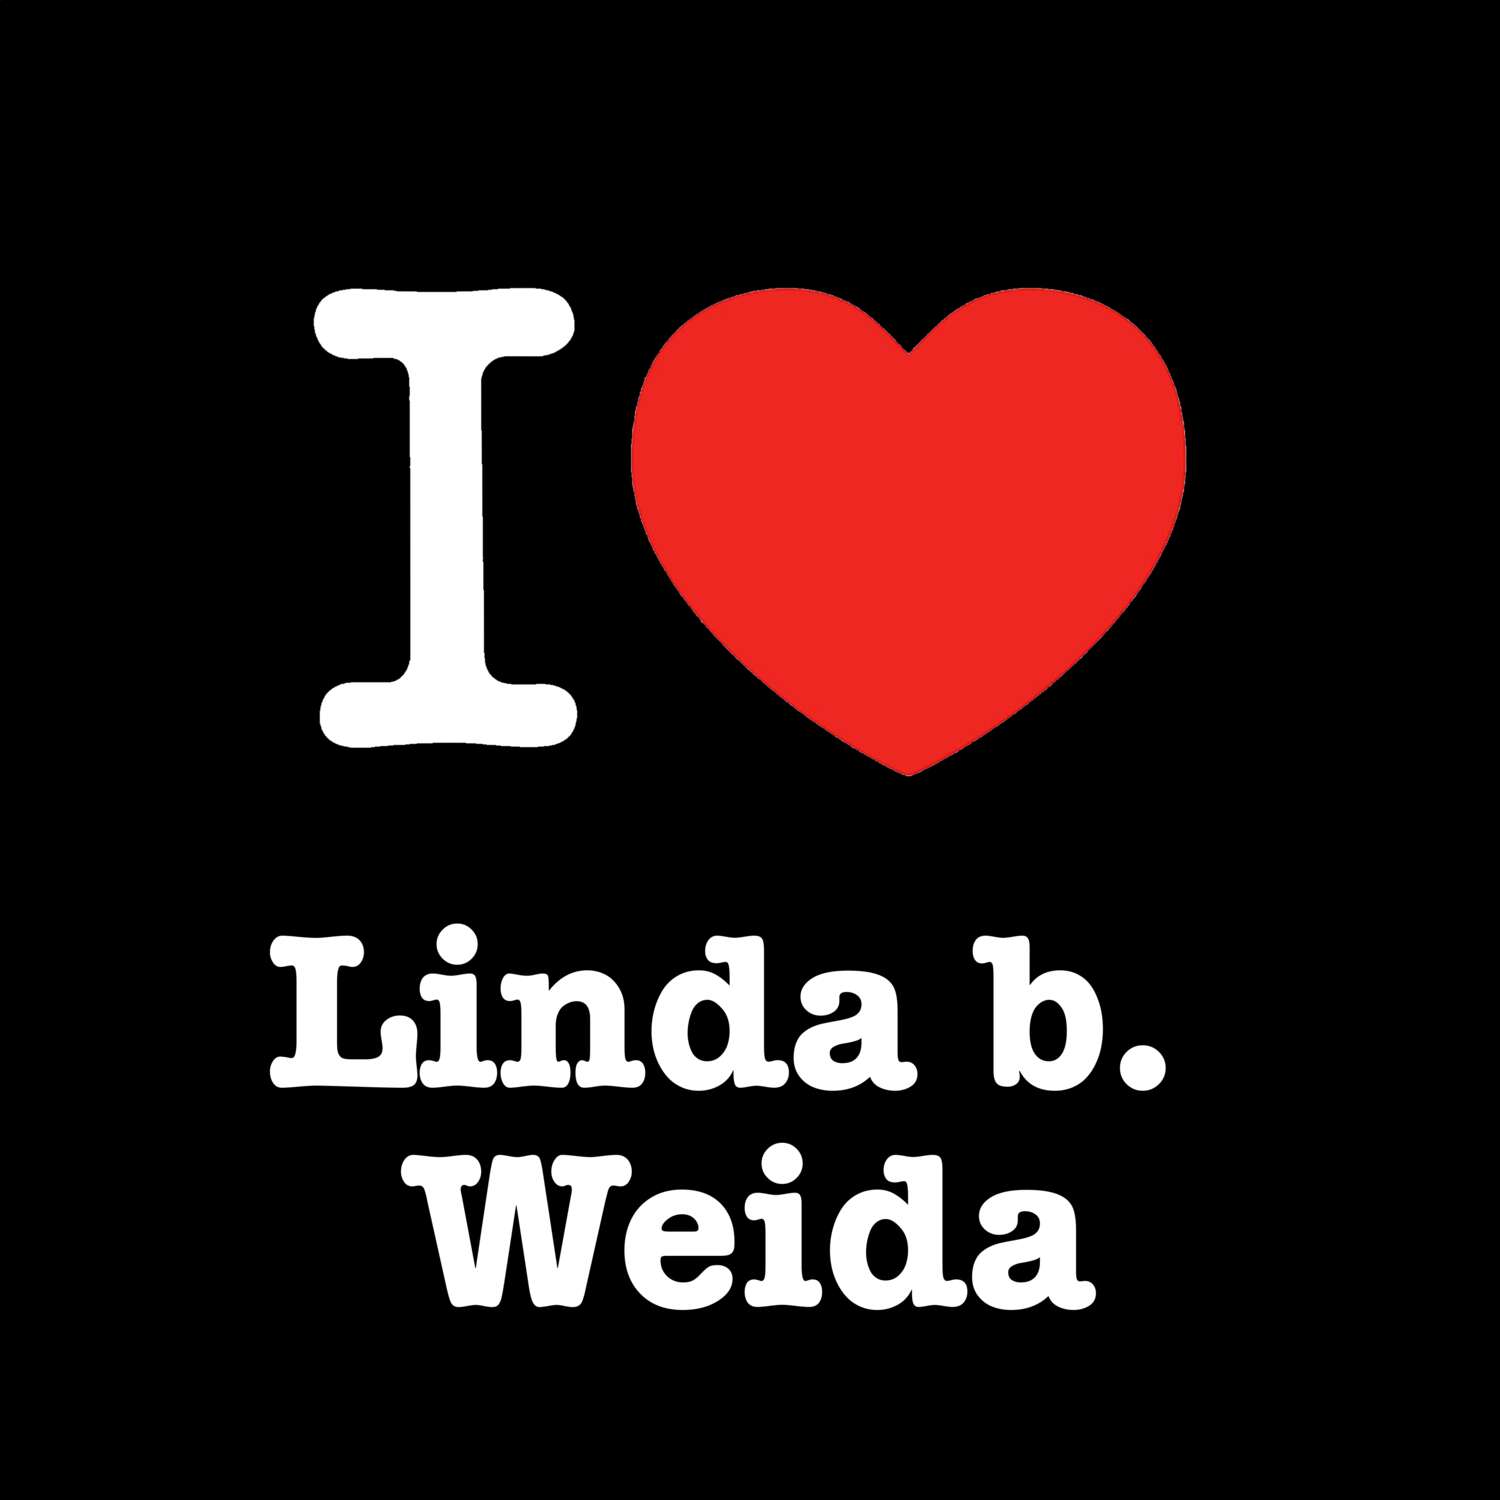 Linda b. Weida T-Shirt »I love«